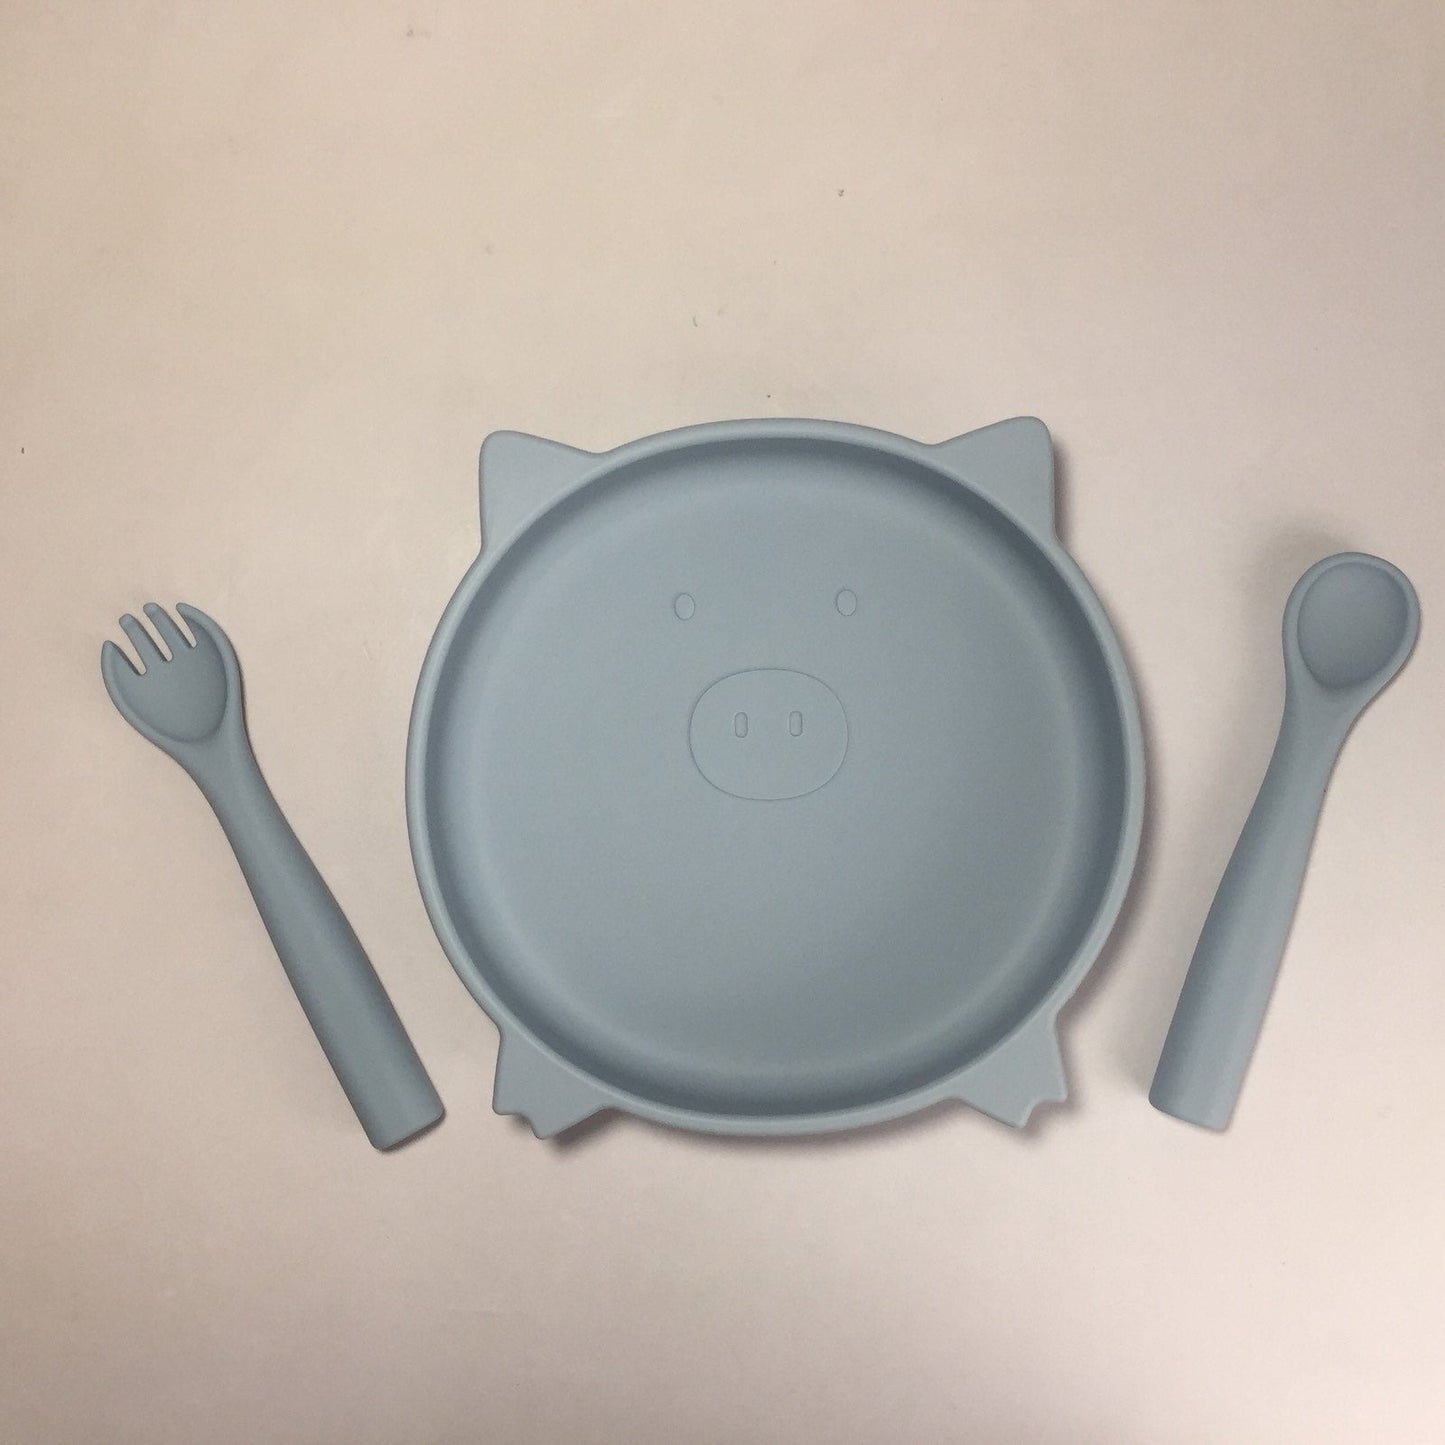 Silicone Pig Design Feeding Set